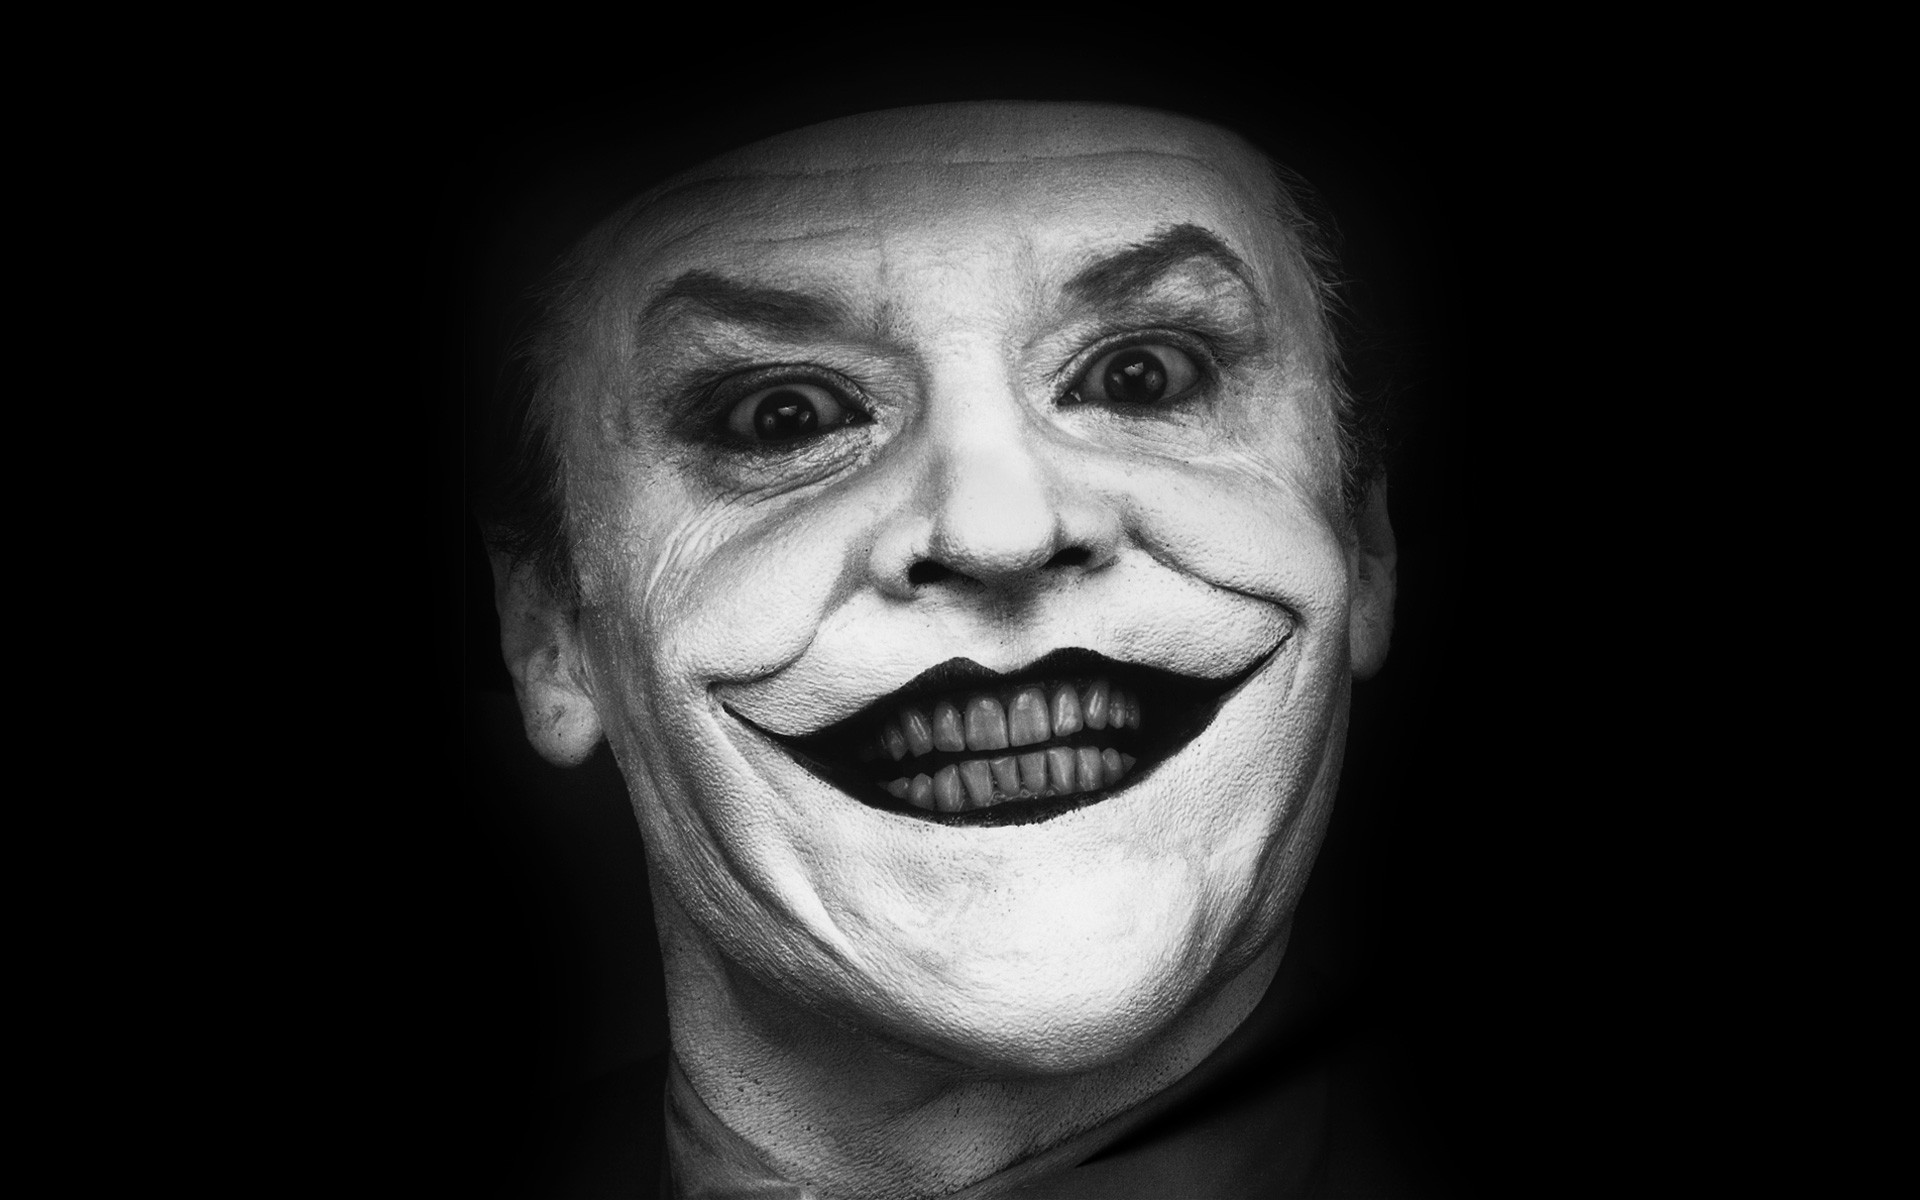 Jack Nicholson Joker Joker Jack Nicholson Monochrome Smiling Face Actor Movies 1920x1200